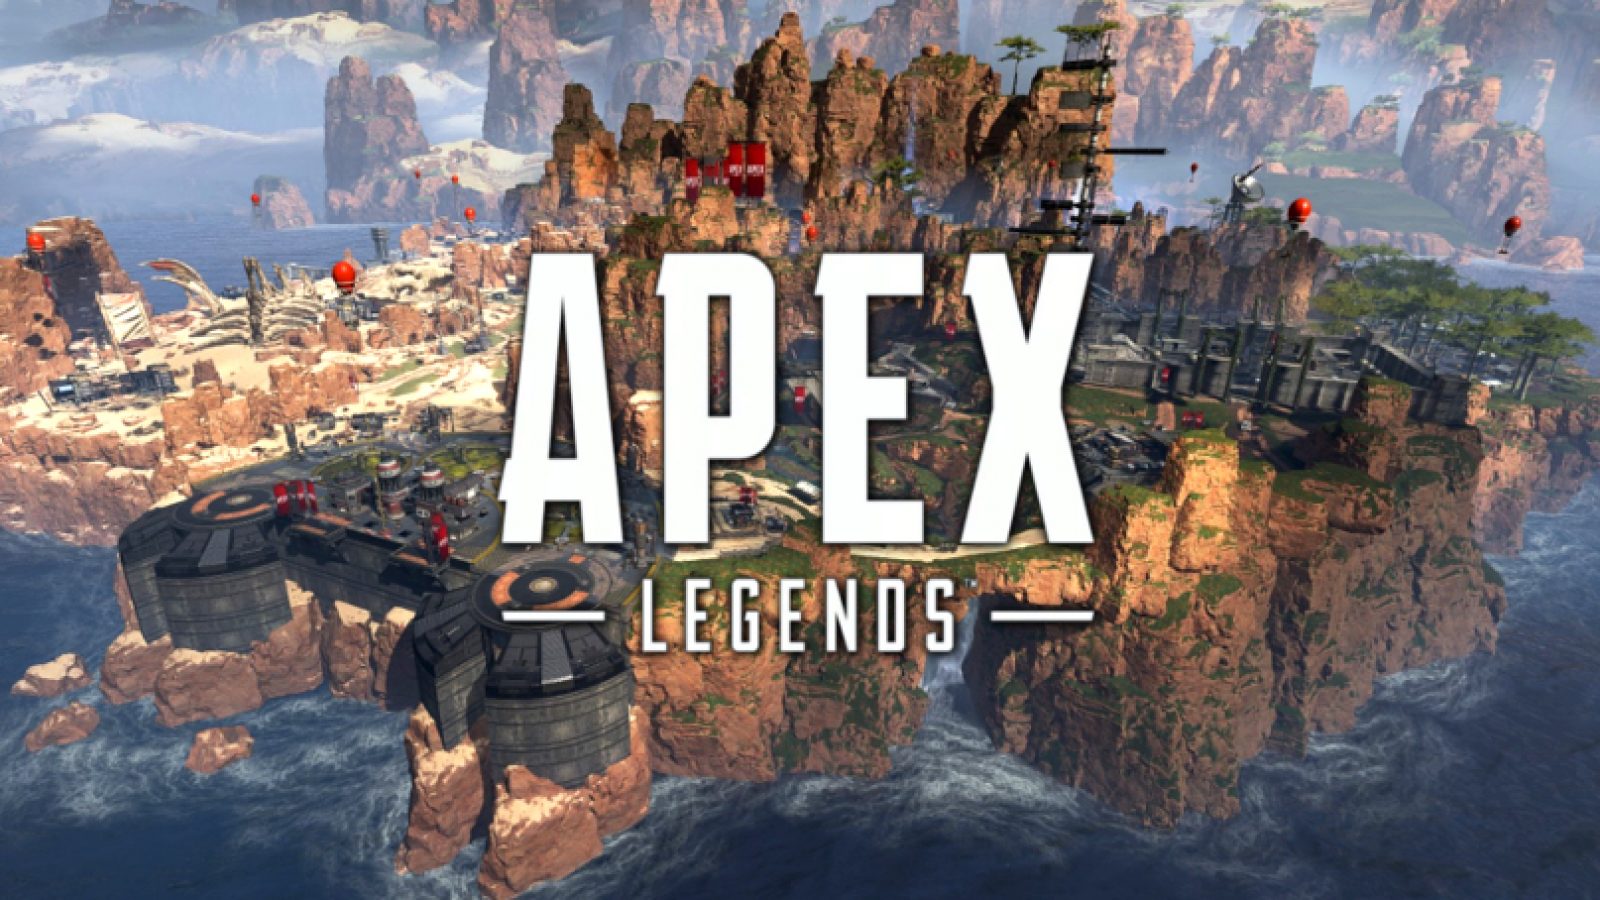 Apex legends player count 2019